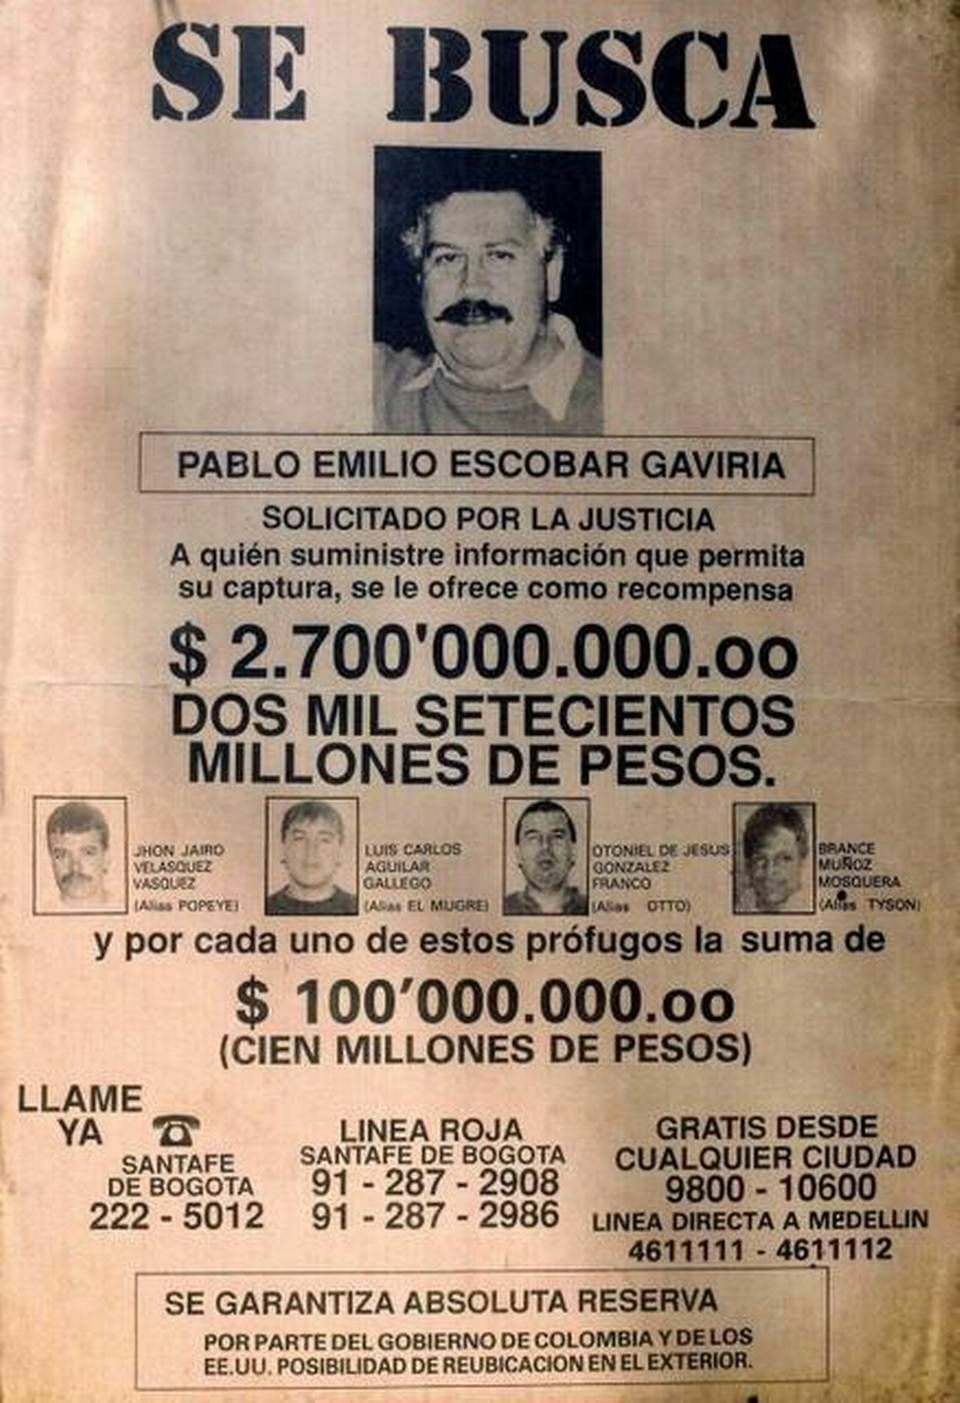 1981 PABLO ESCOBAR PHOTO 8.5X11 WANTED POSTER SE BUSCA GANG DRUG CARTEL REPRINT